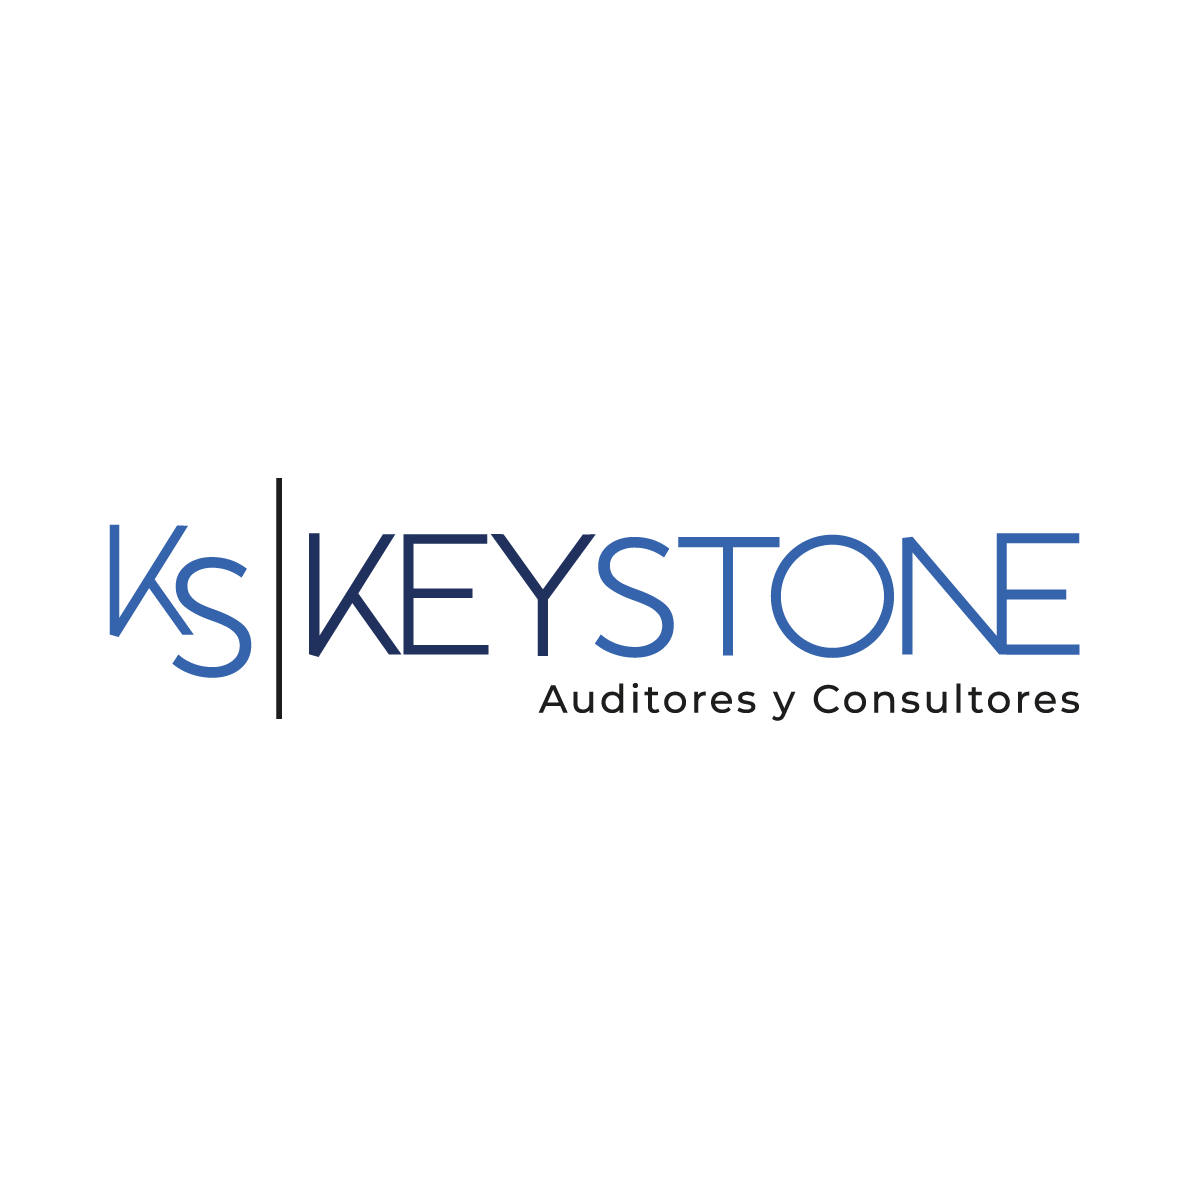 Keystone Auditores Chile